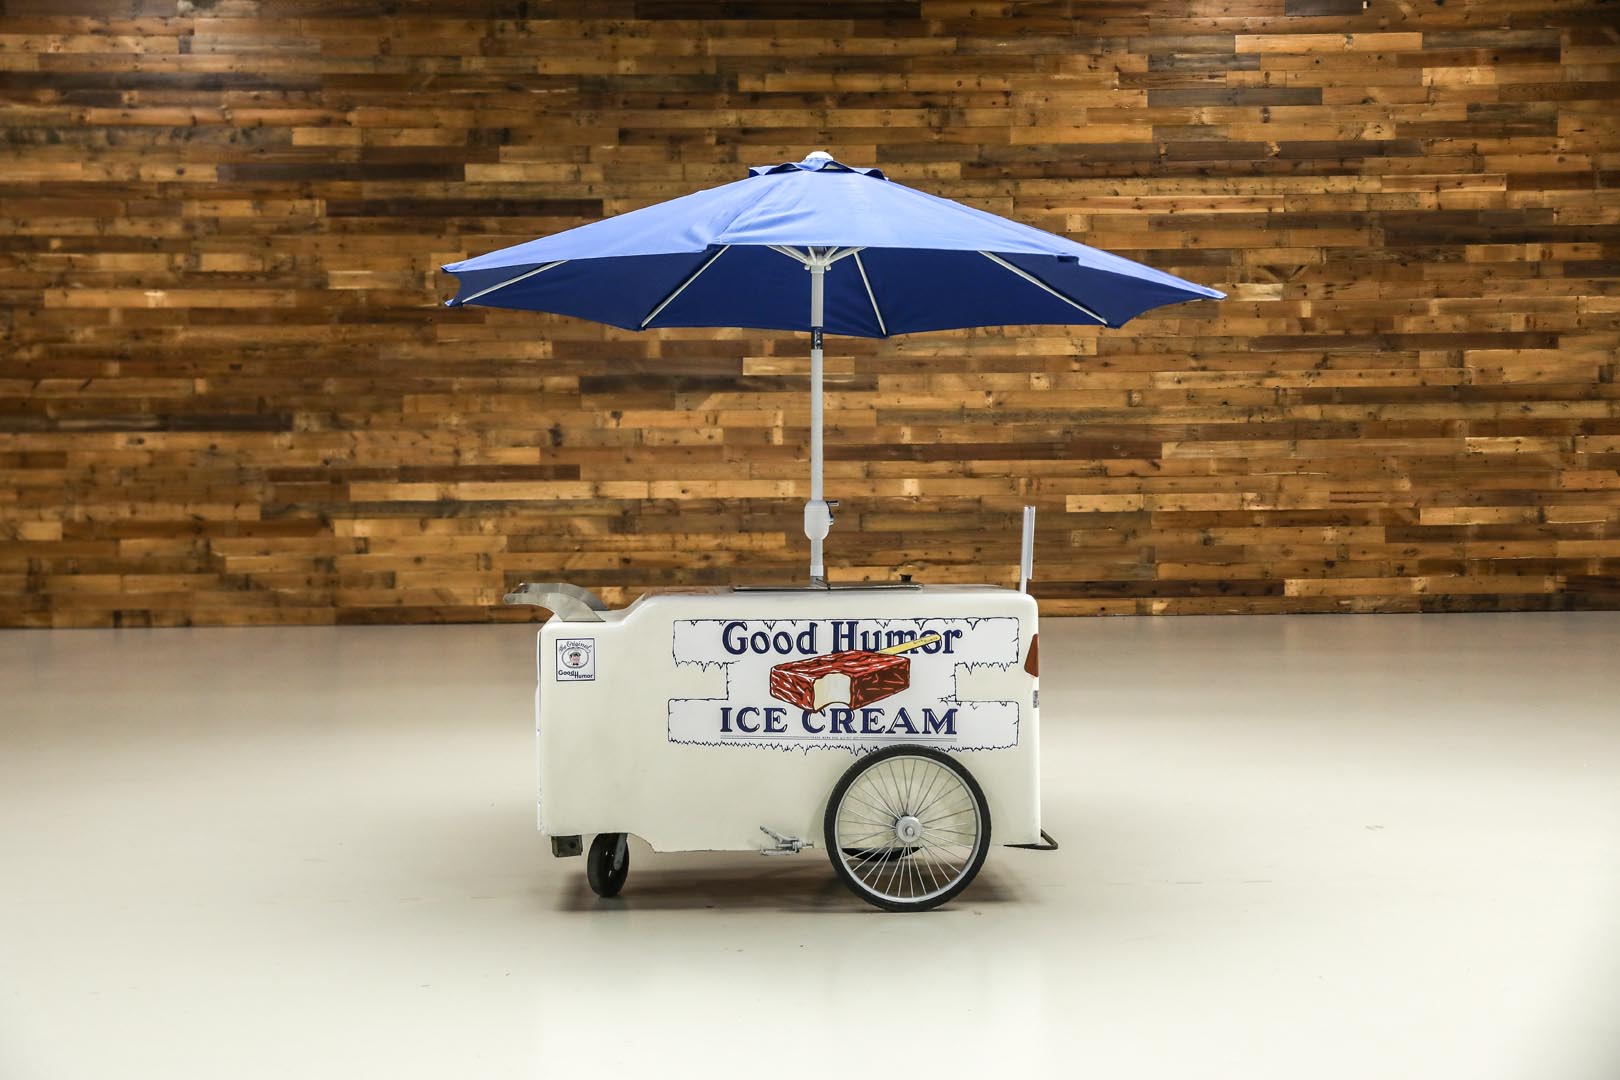  Good Humor Ice Cream Cart by H ackney 